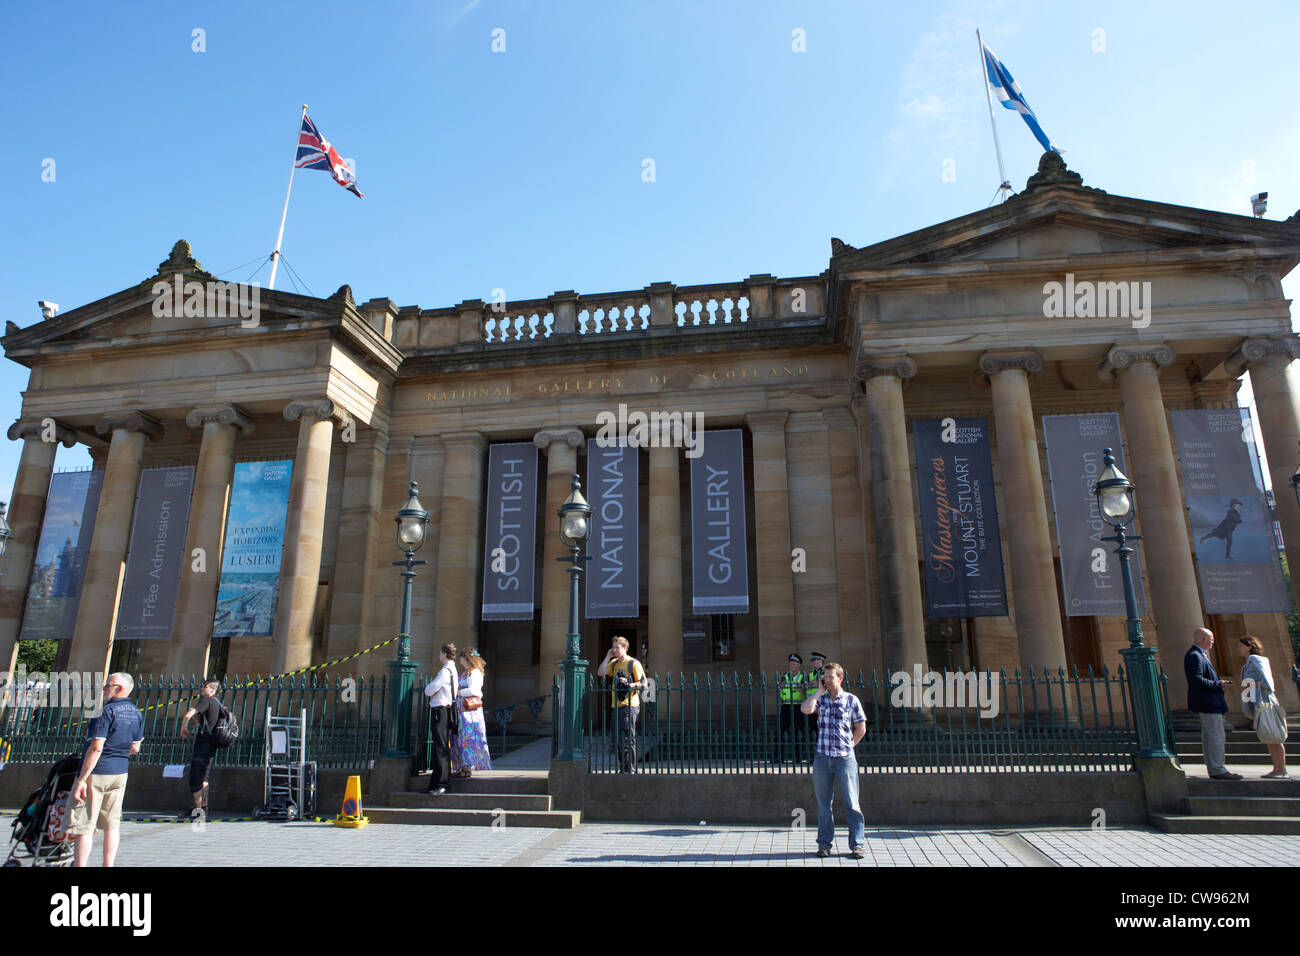 national gallery of scotland scottish national gallery edinburgh scotland uk united kingdom Stock Photo